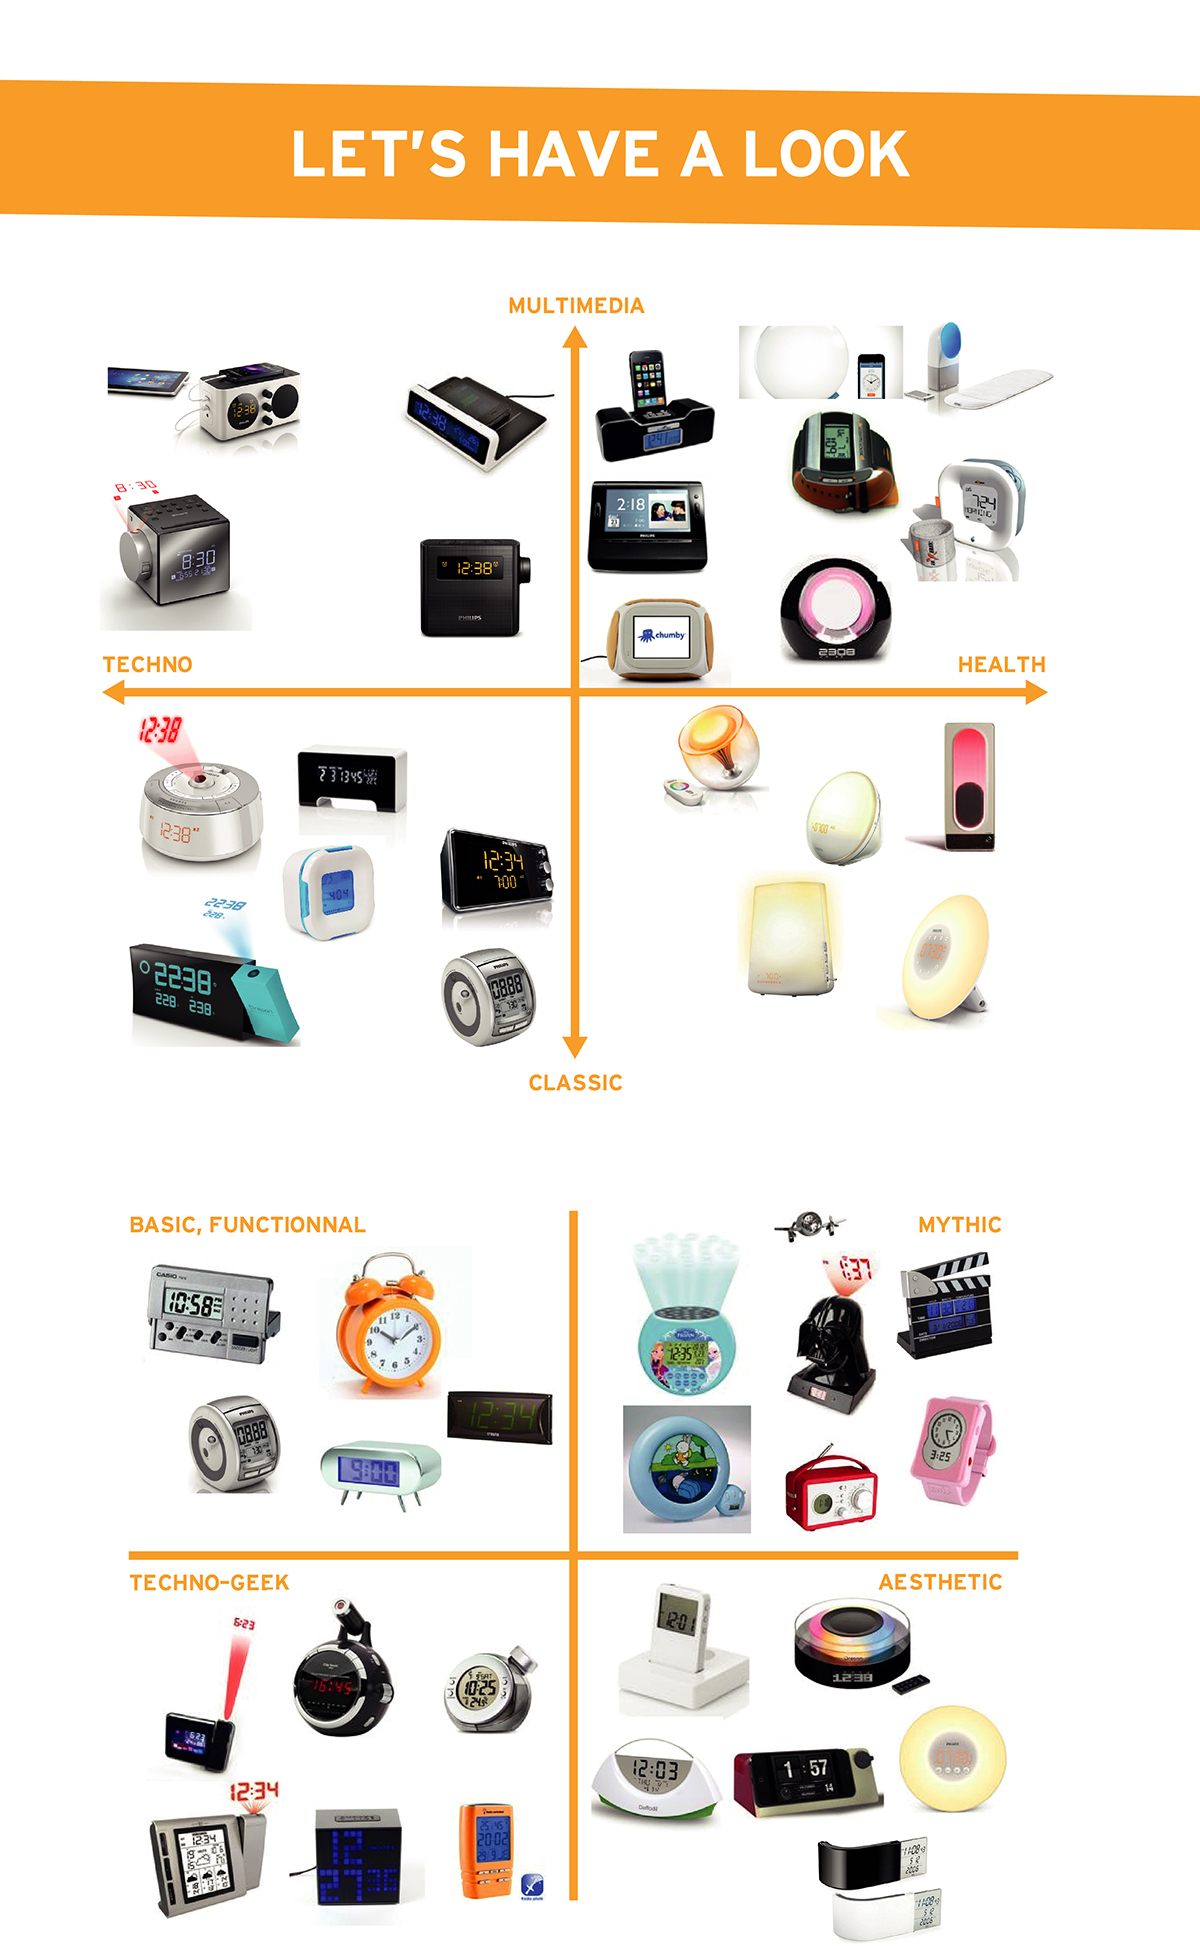 UX design design olfactory alarm clock Alarm clock sensorwake consumer product analysis